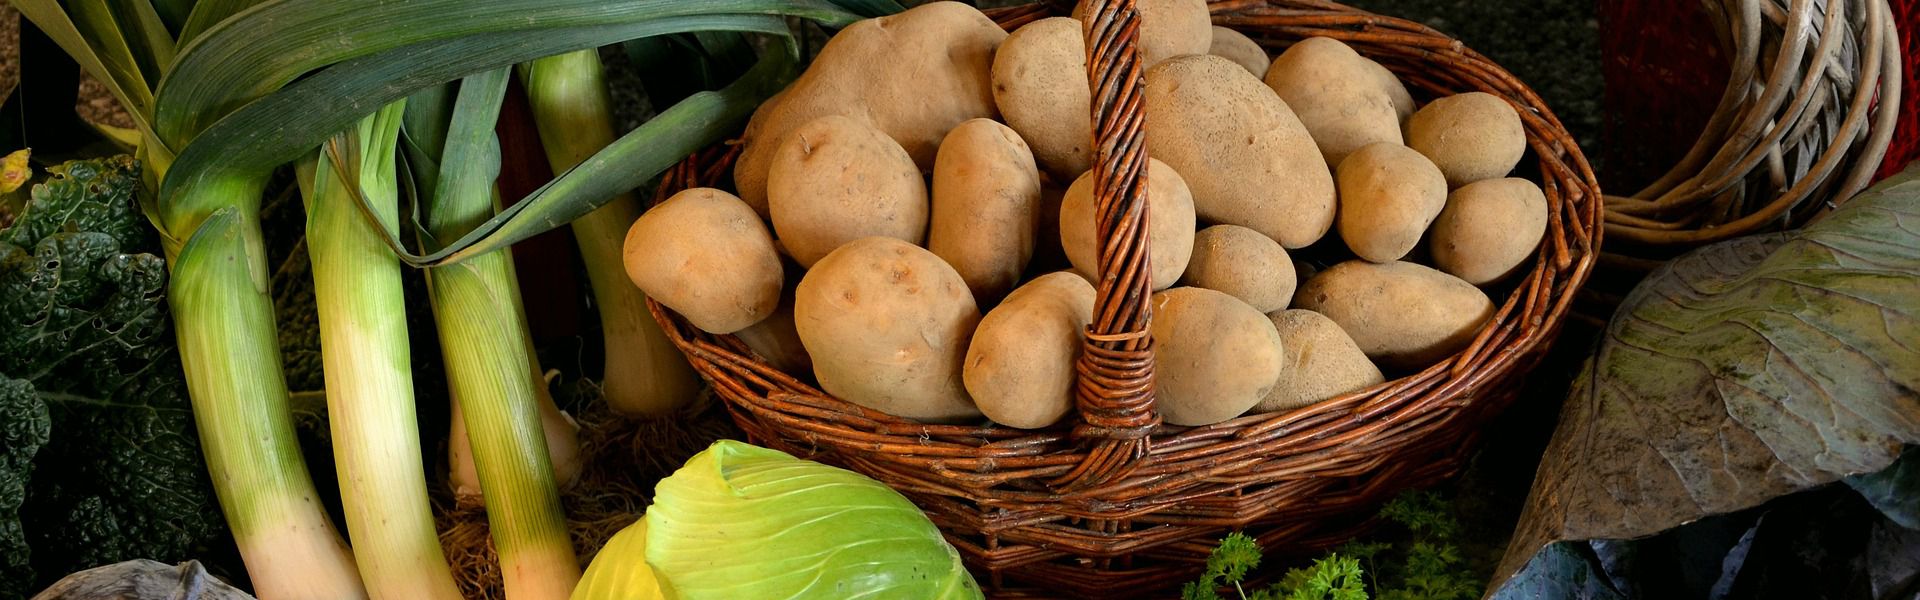 Aardappelen, groente & fruit